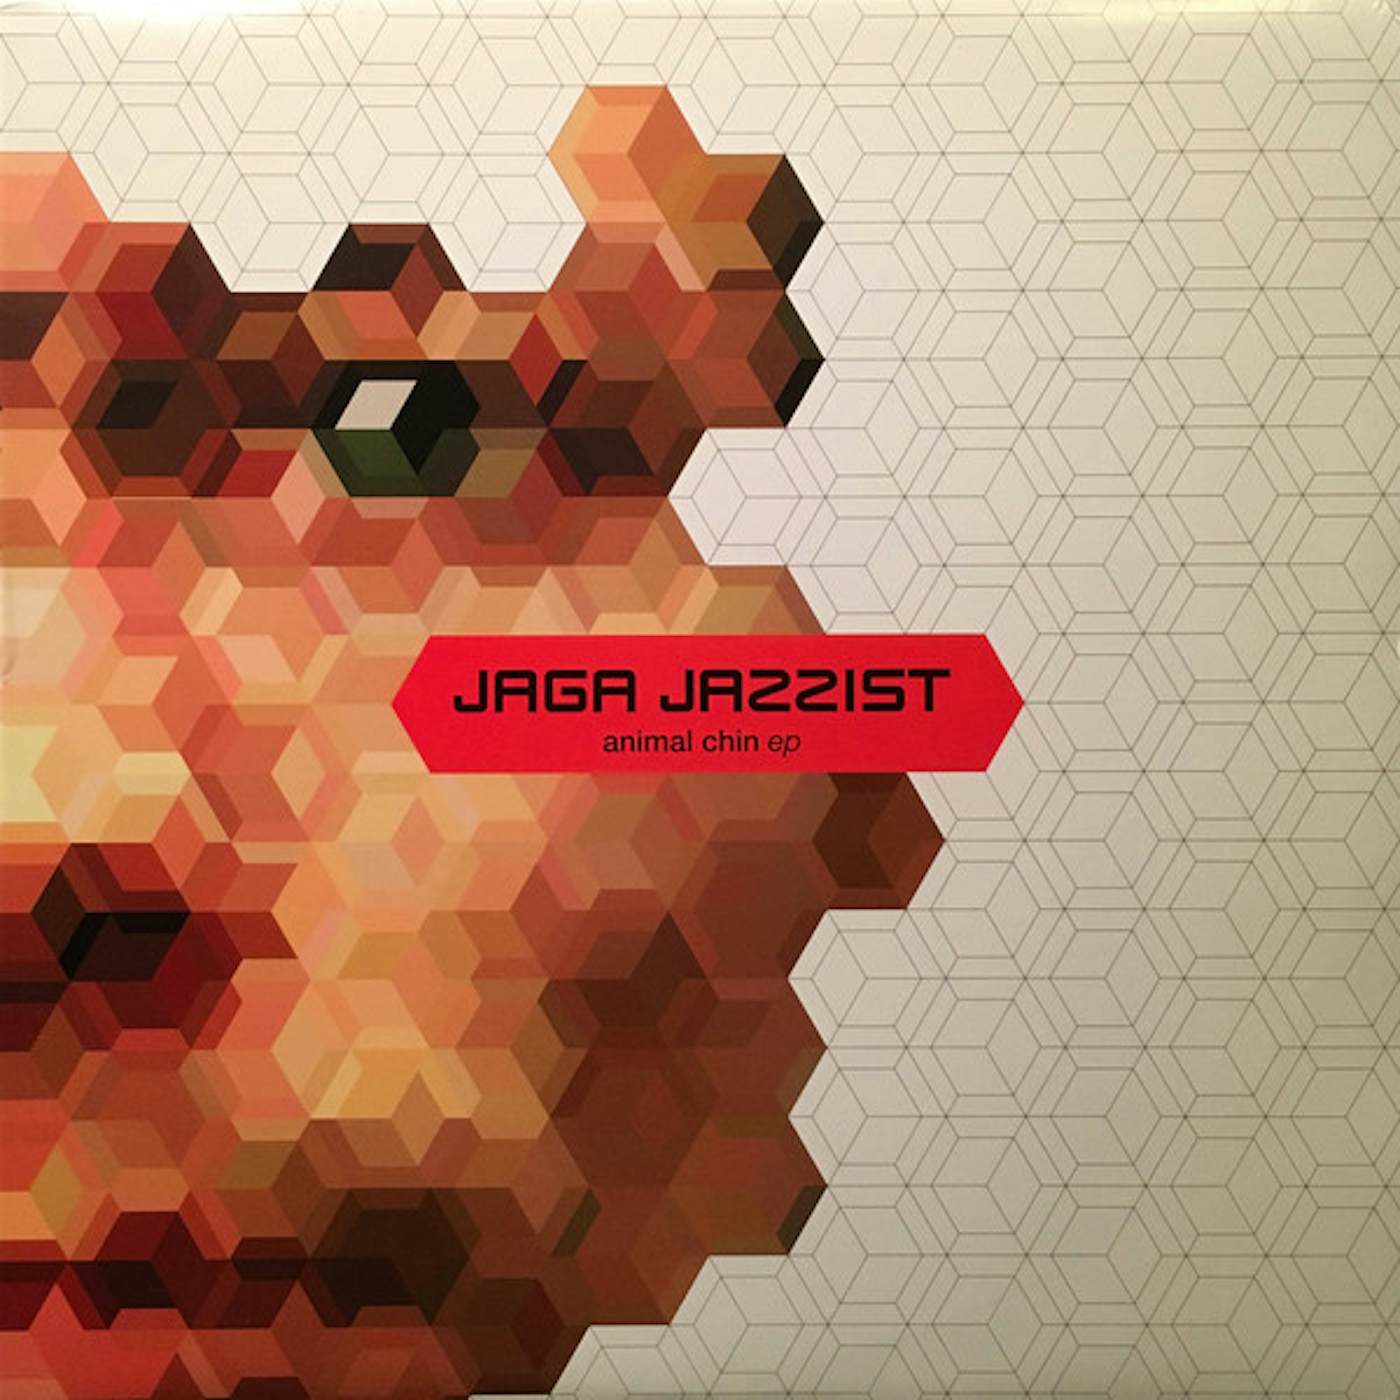 Jaga Jazzist Animal Chin Vinyl Record